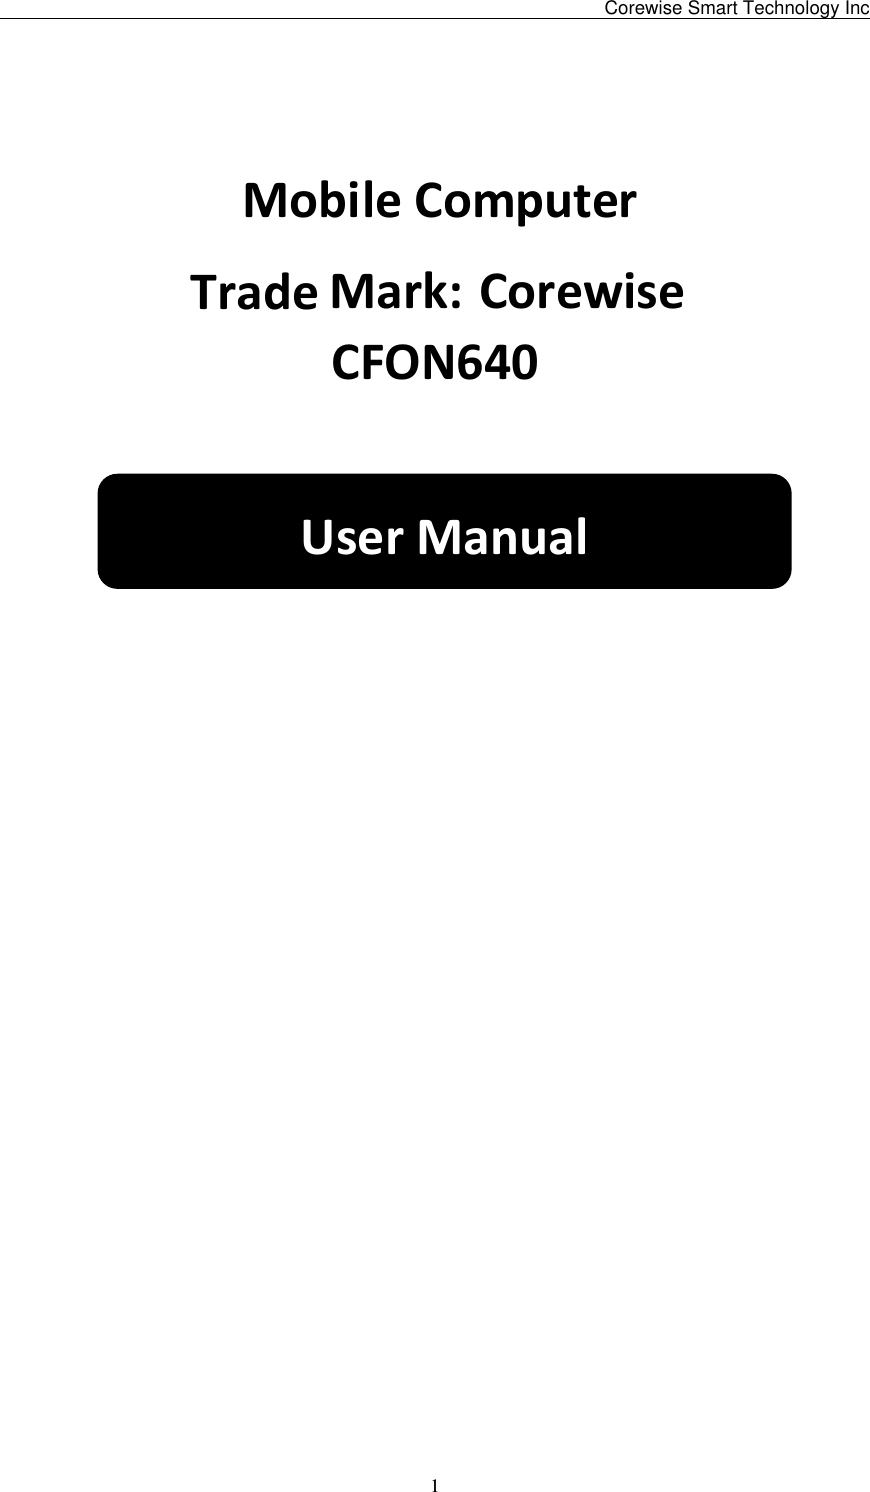                                                1  MobileComputer                                    CFON640                  UserManualCorewise Smart Technology IncTrade Mark: Corewise